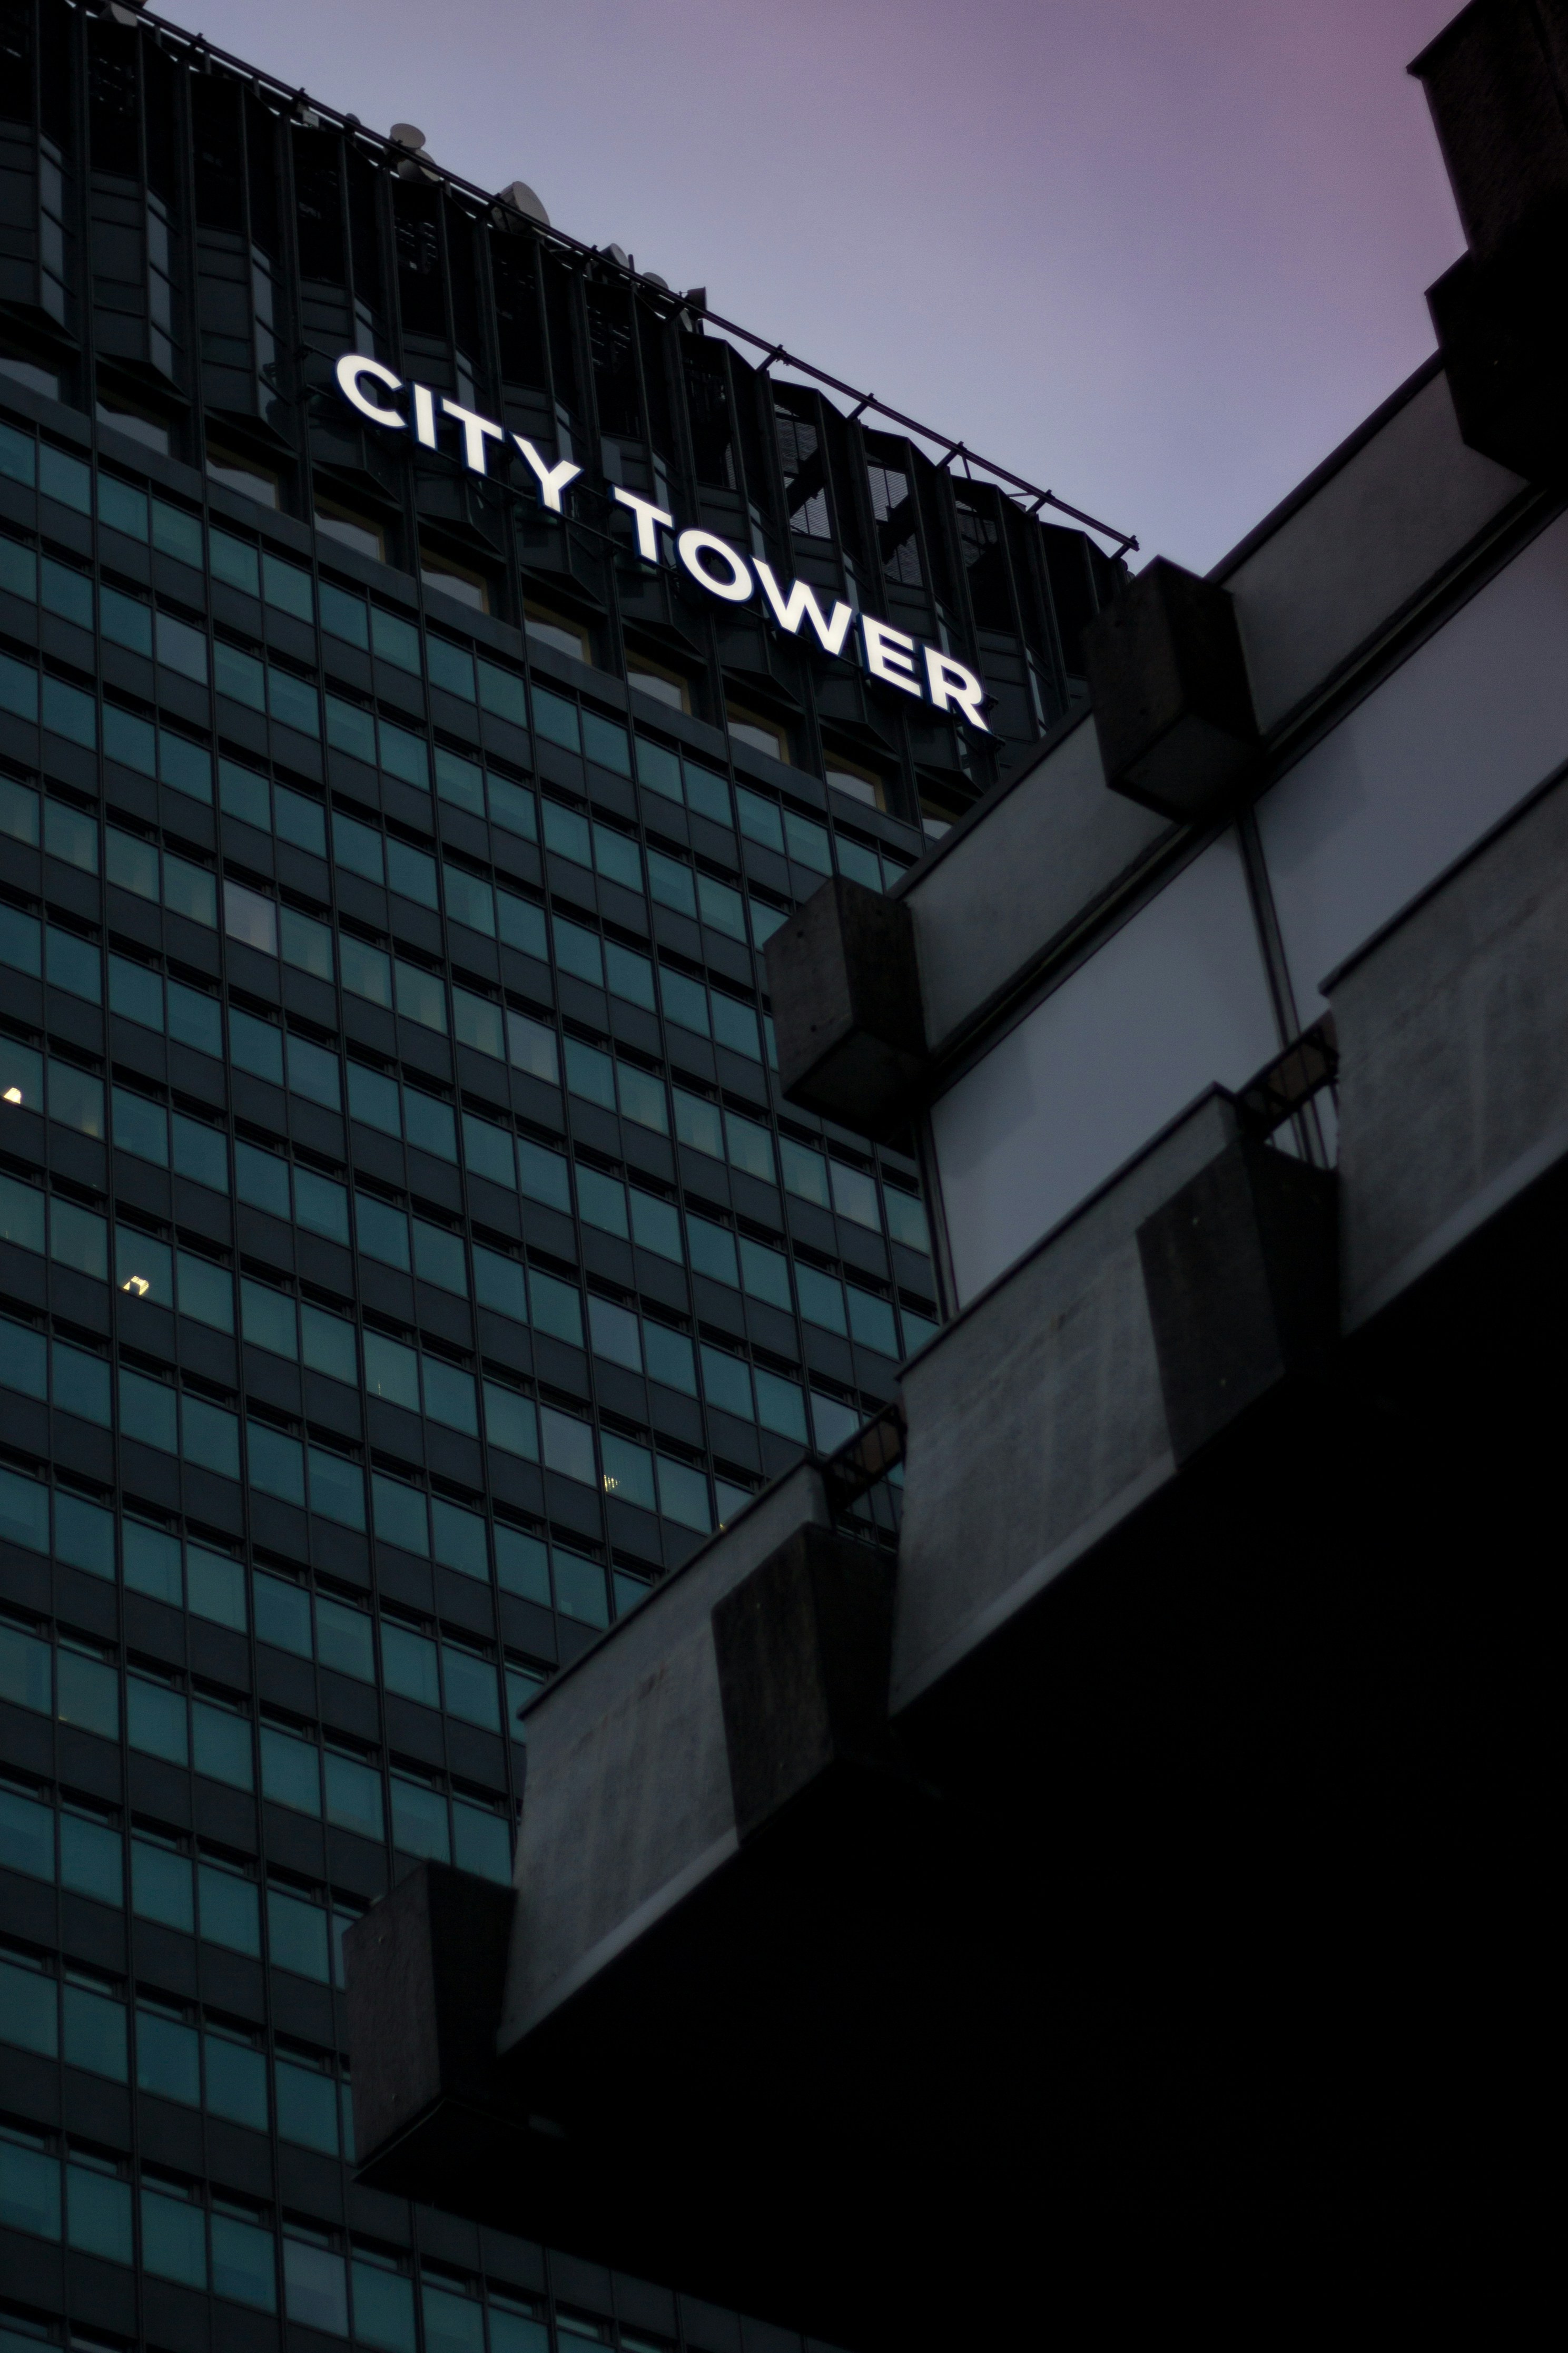 city tower